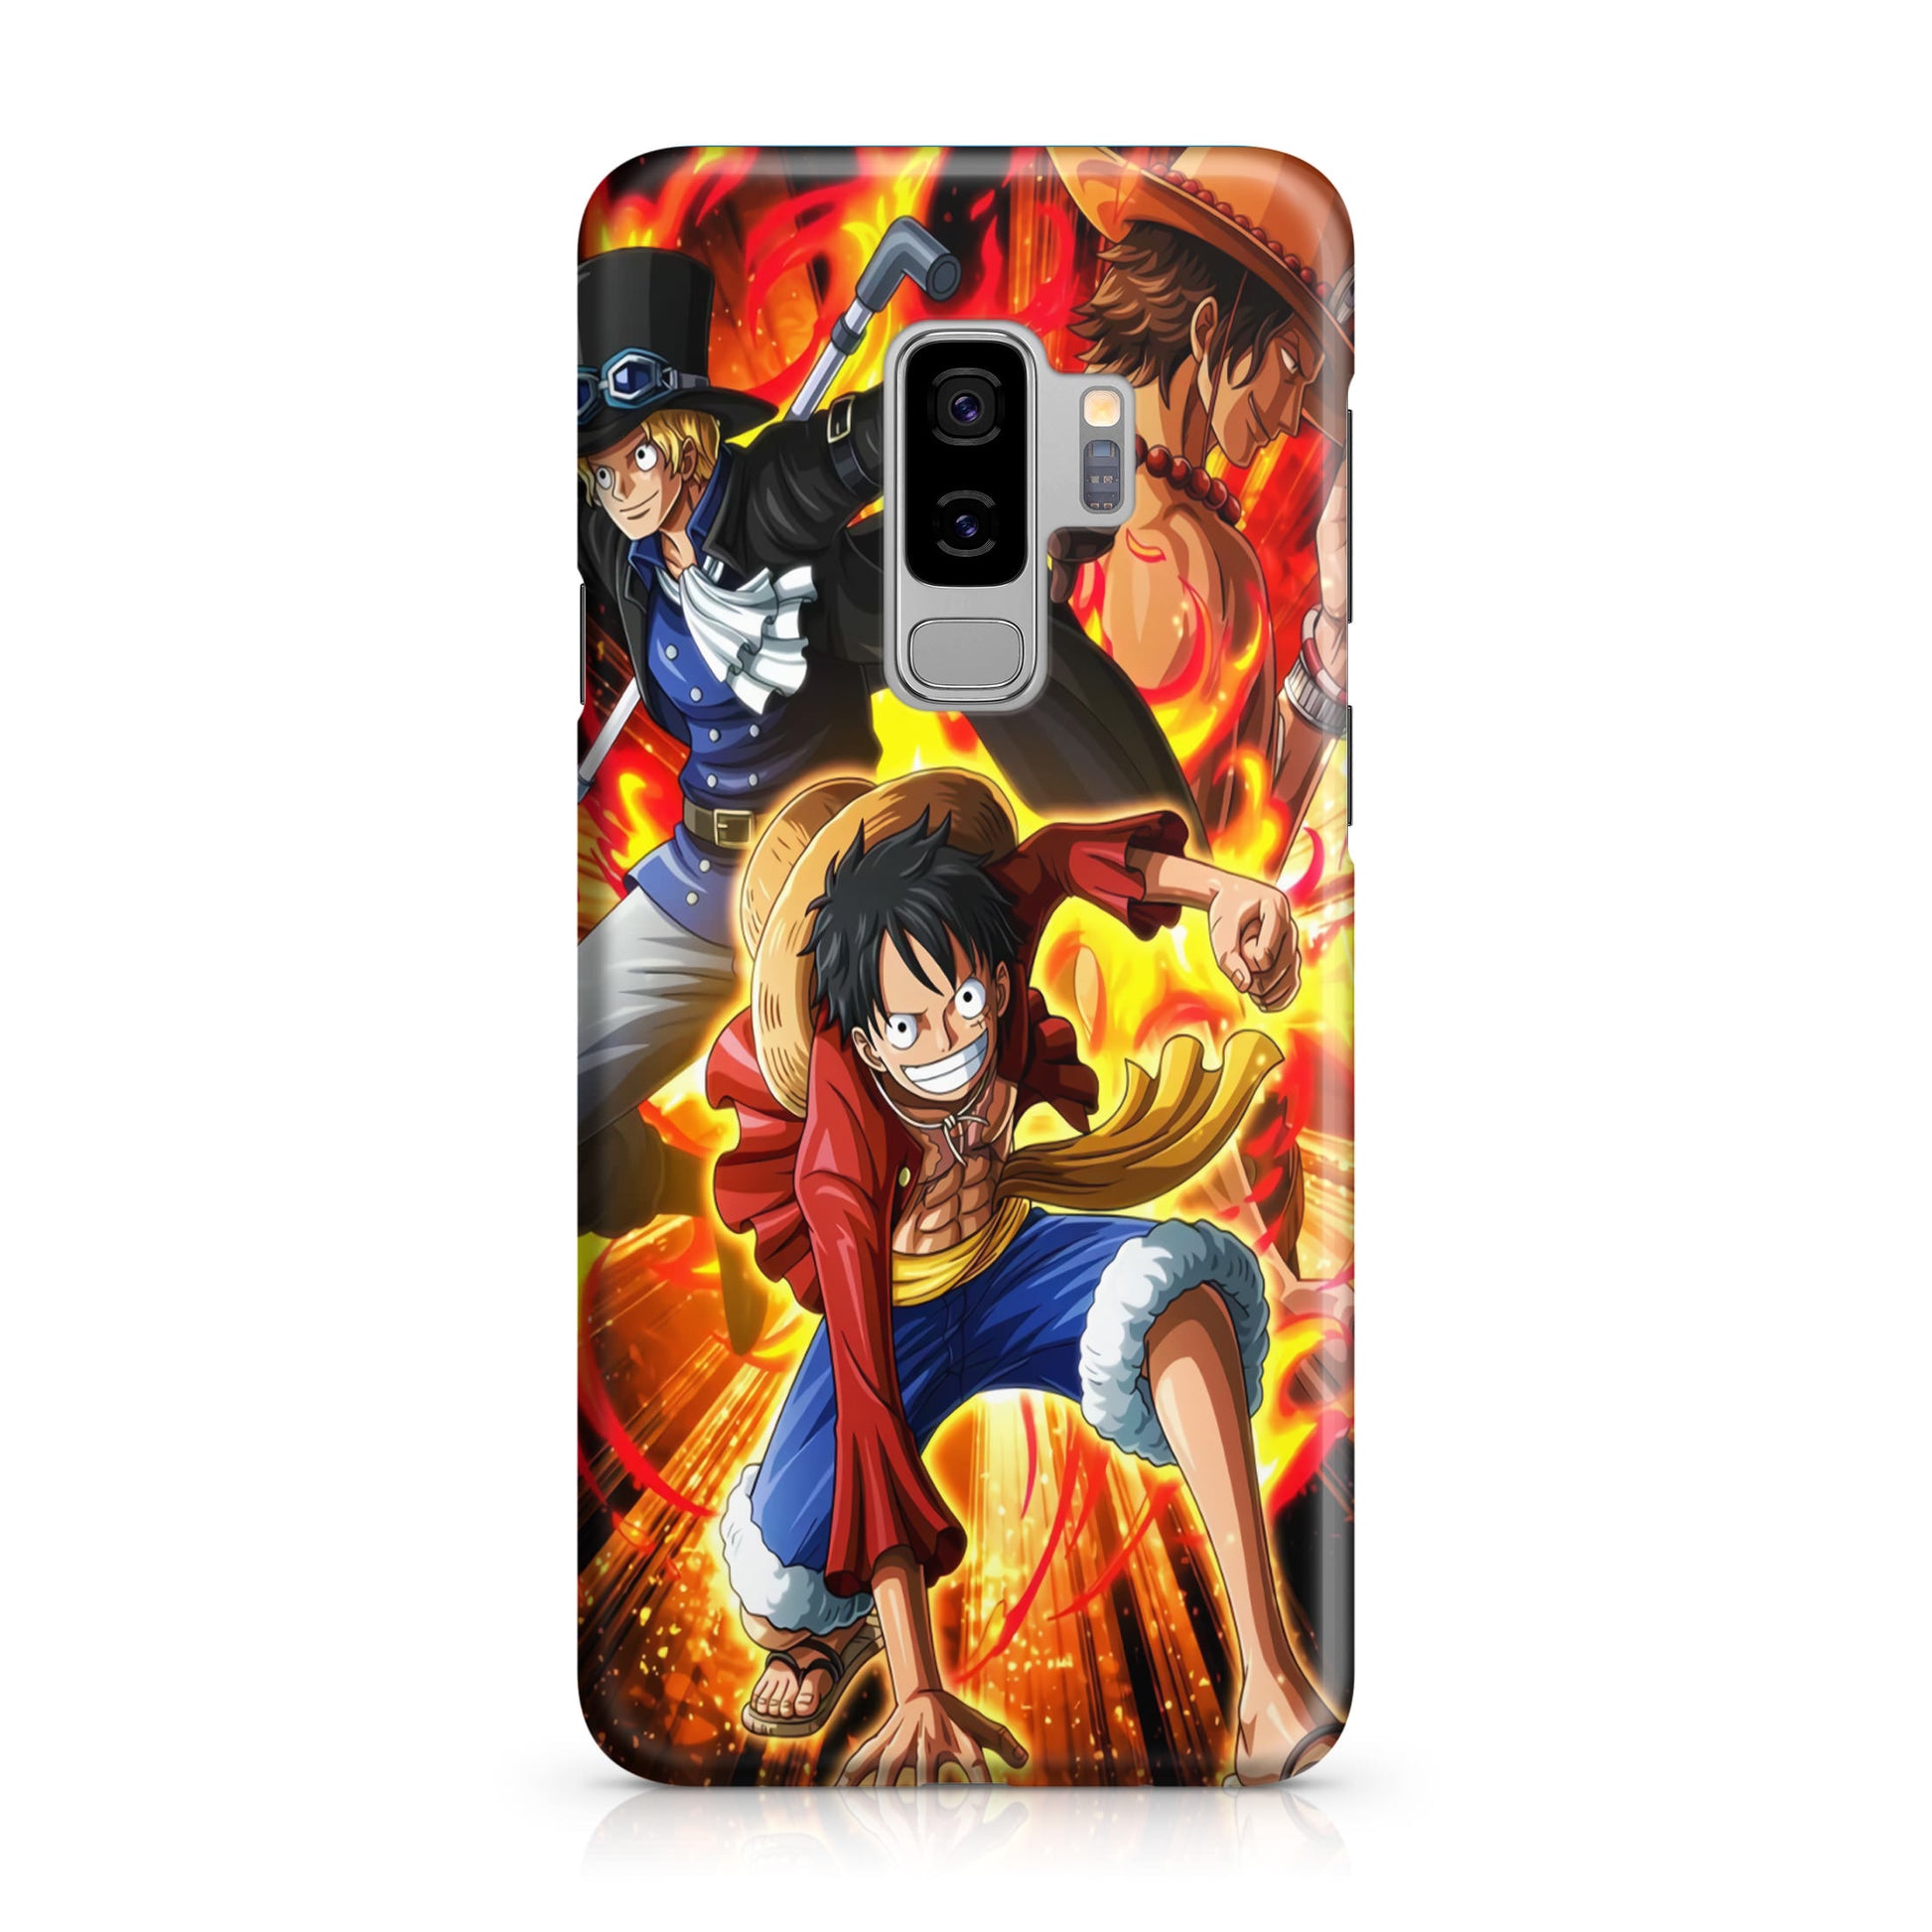 Ace Sabo Luffy Brotherhood Galaxy S9 Plus Case